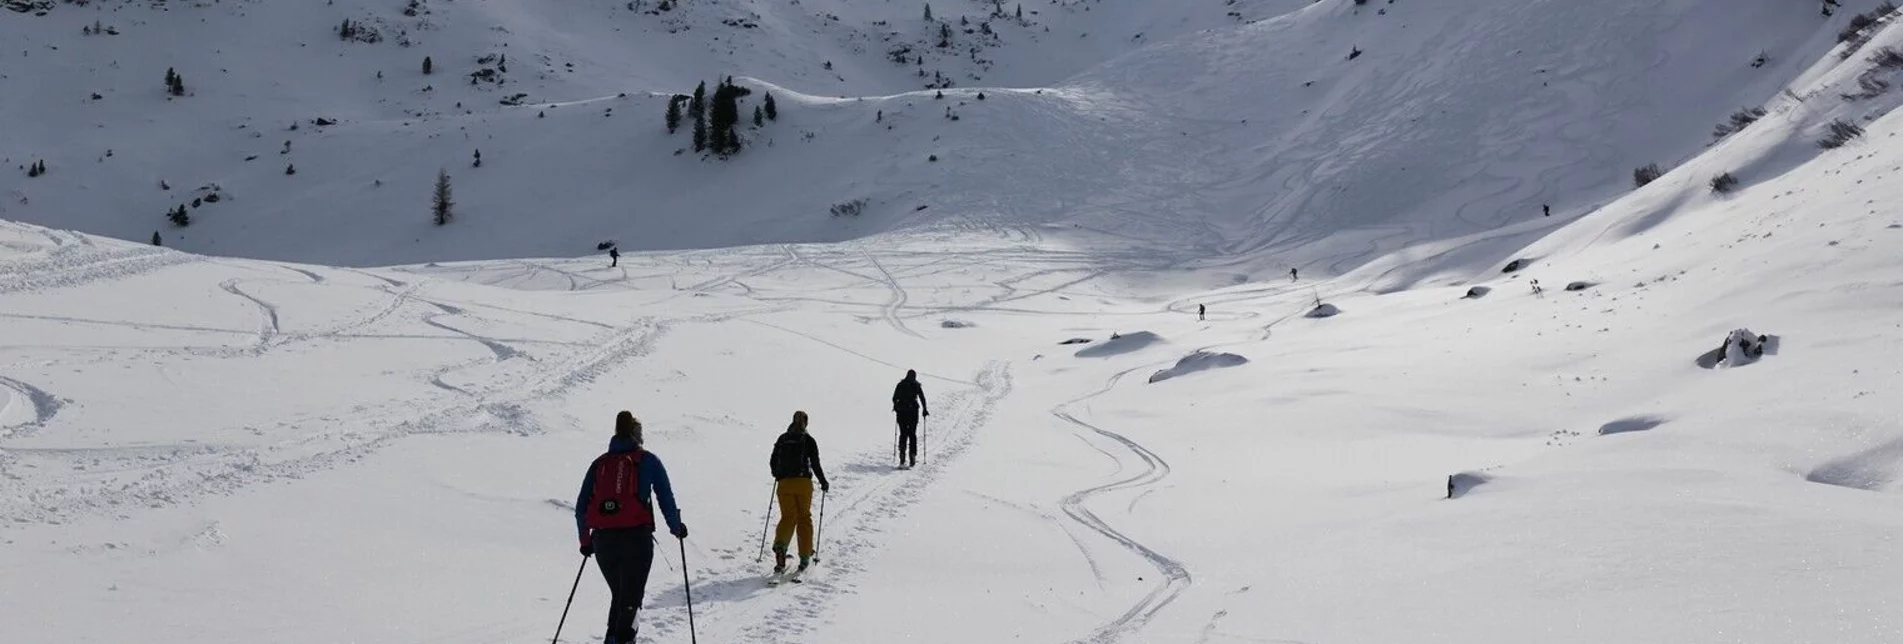 Ski Touring Ski tour to the Bärneck - Touren-Impression #1 | © Erlebnisregion Schladming-Dachstein